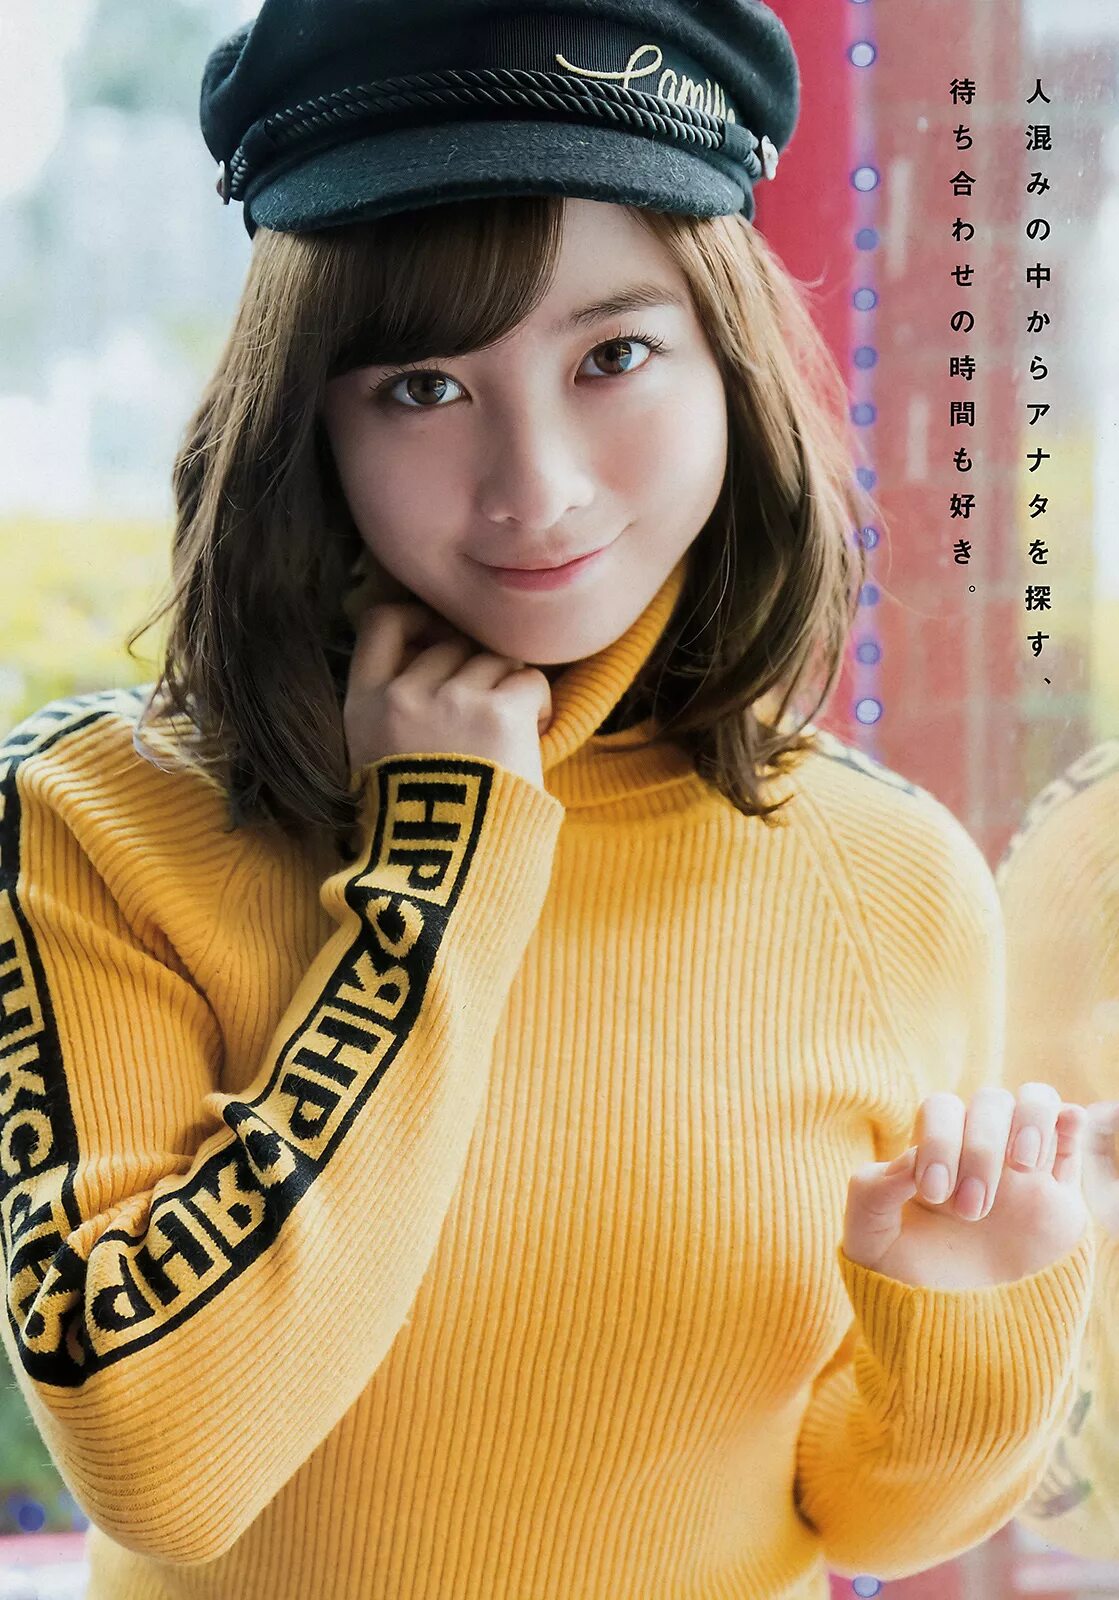 Young magazine. Kanna Hashimoto. Хашимото Канна / Hashimoto Kanna. Kanna Hashimoto hot. Кофта Kanna желтая.